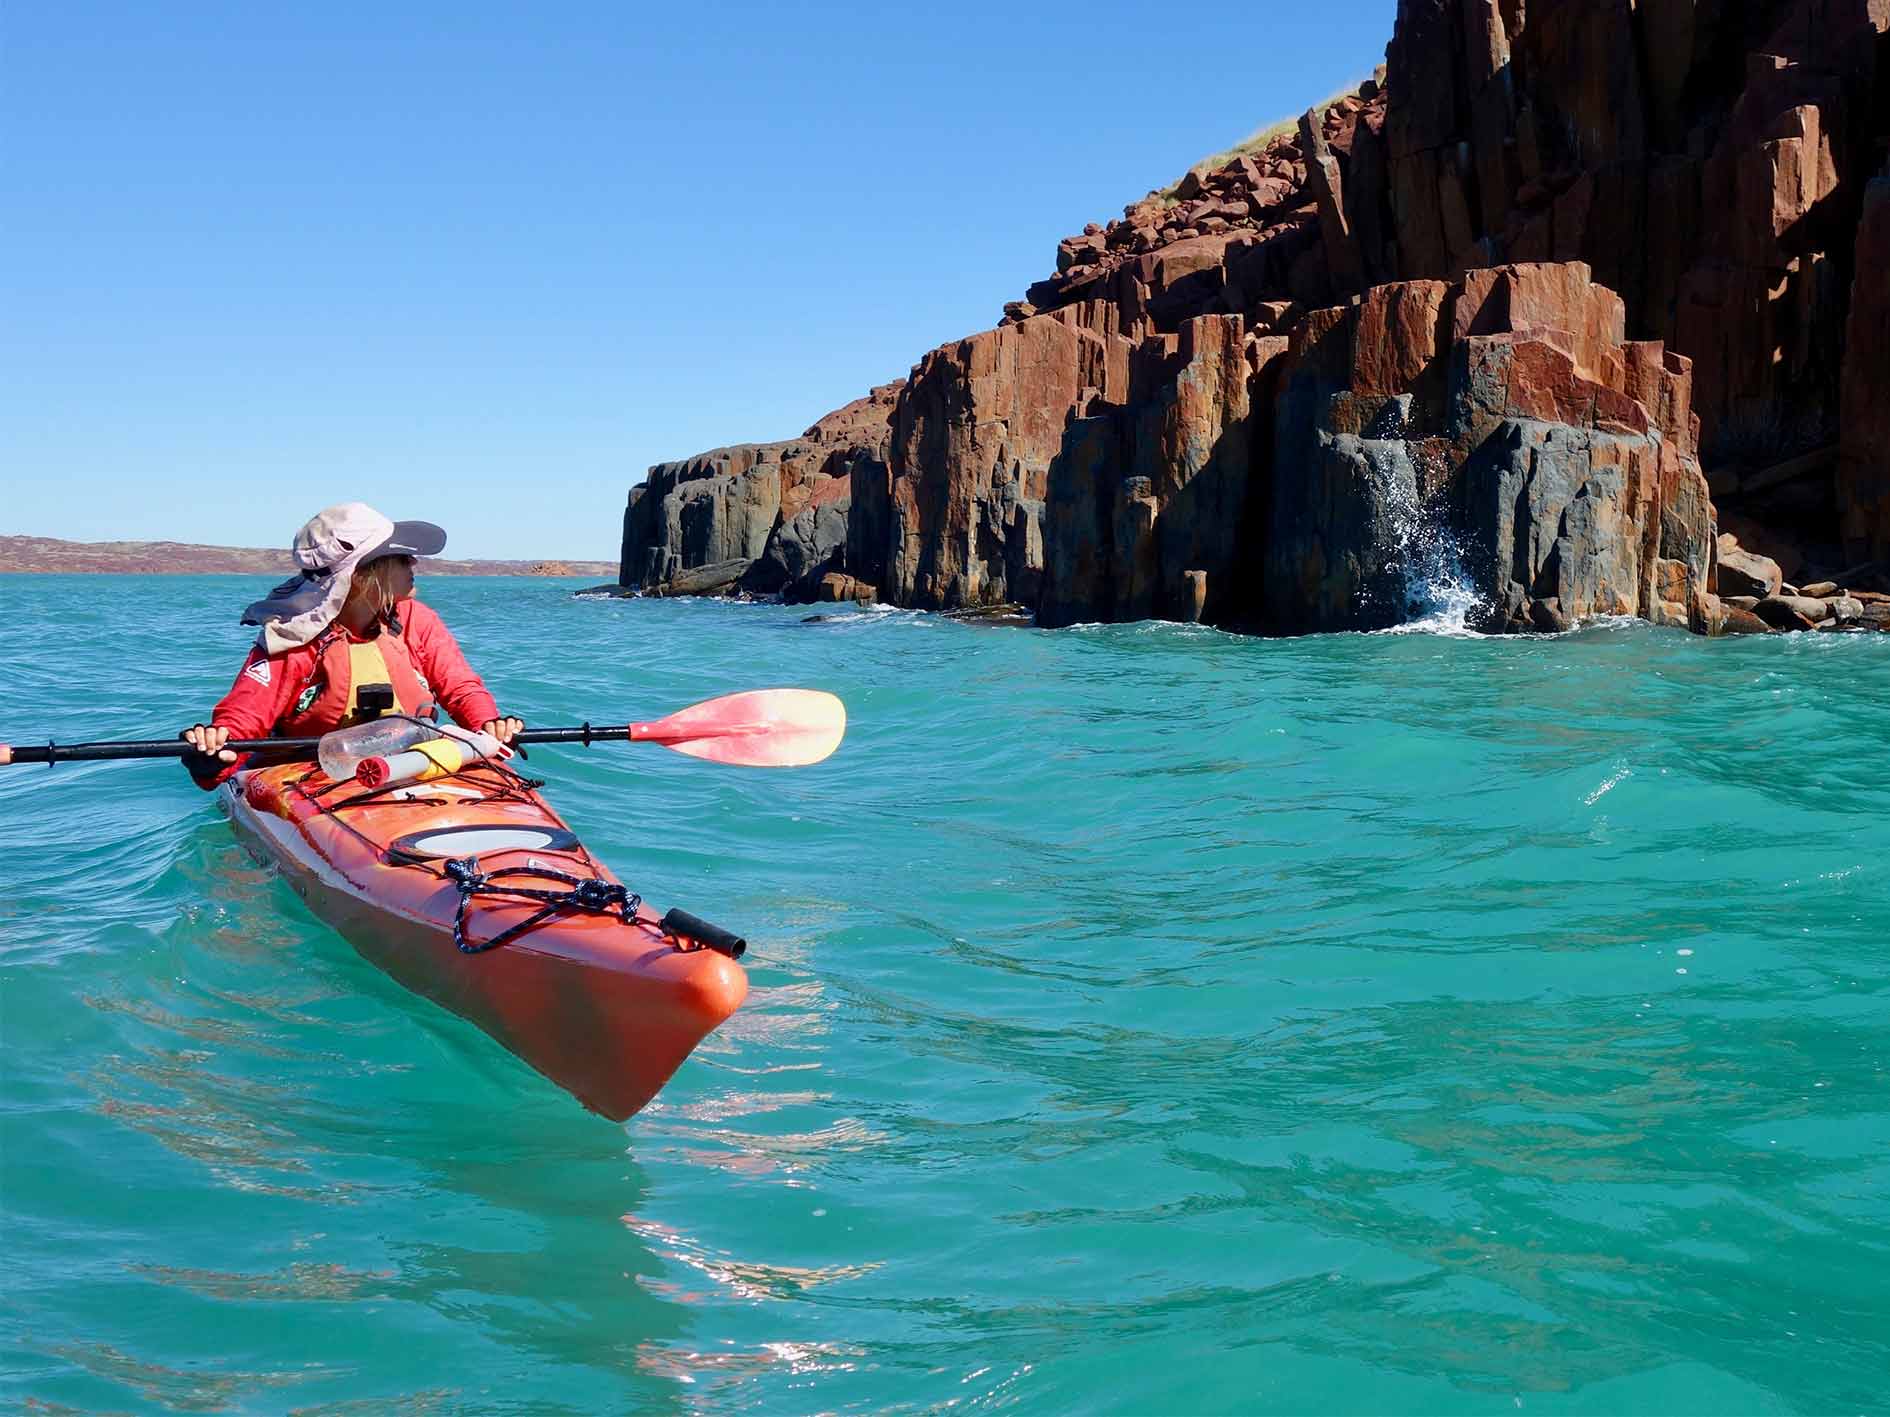 Sea Kayaking amongst islands on the Dampier Archipelago